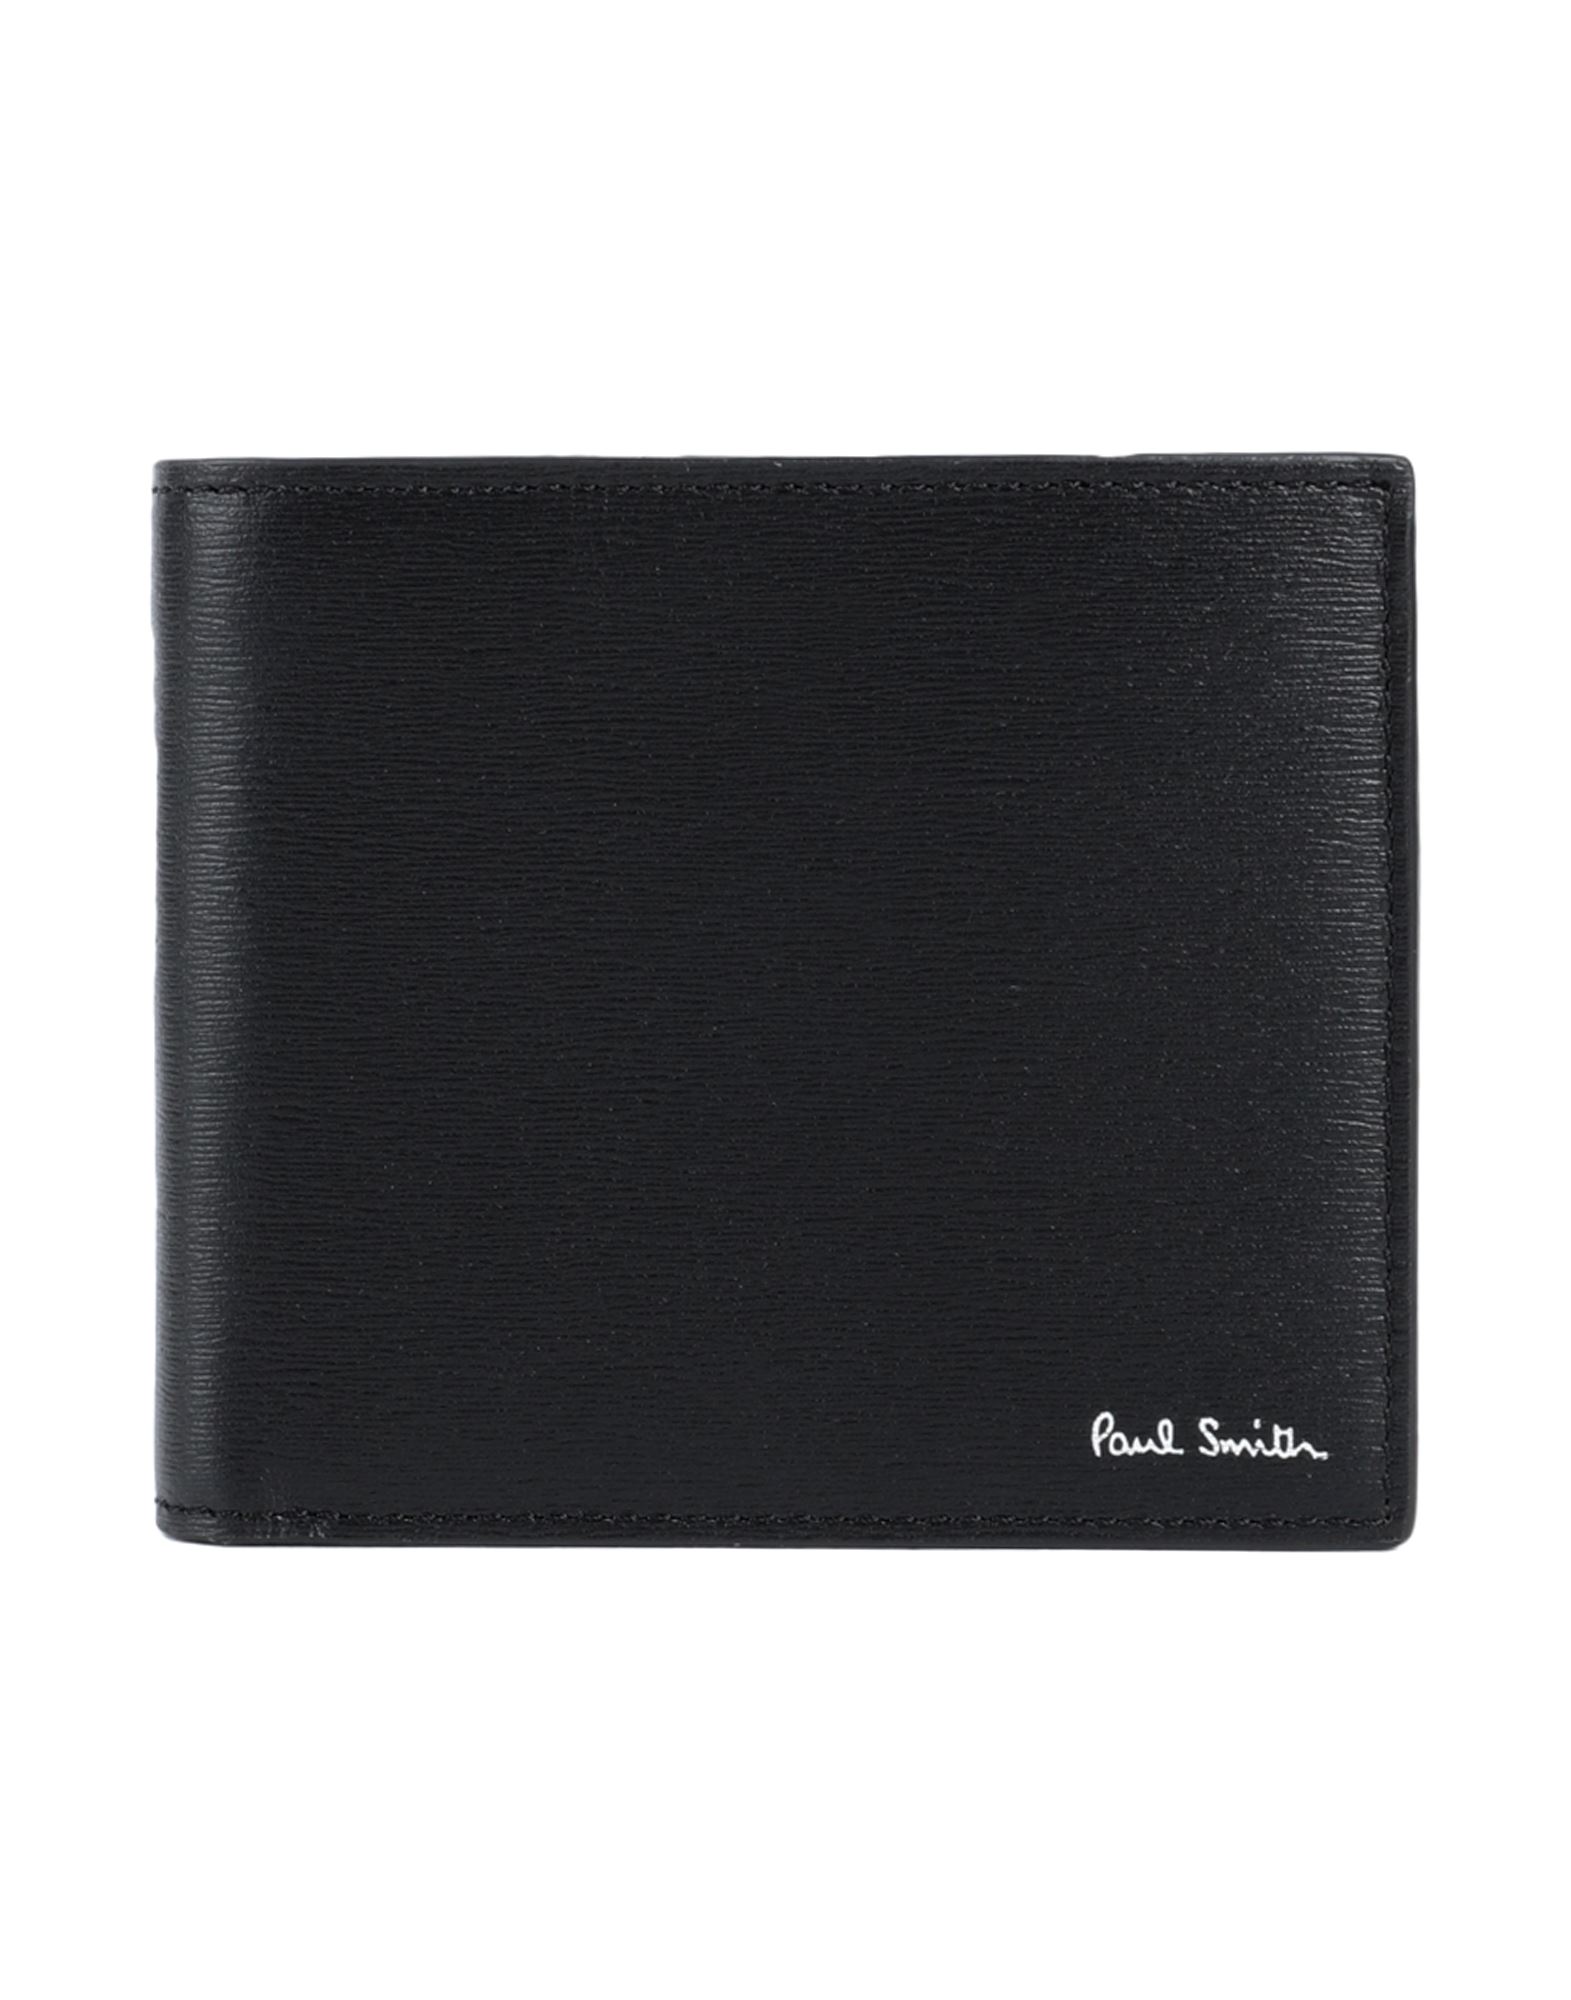 Shop Paul Smith Man Wallet Black Size - Bovine Leather